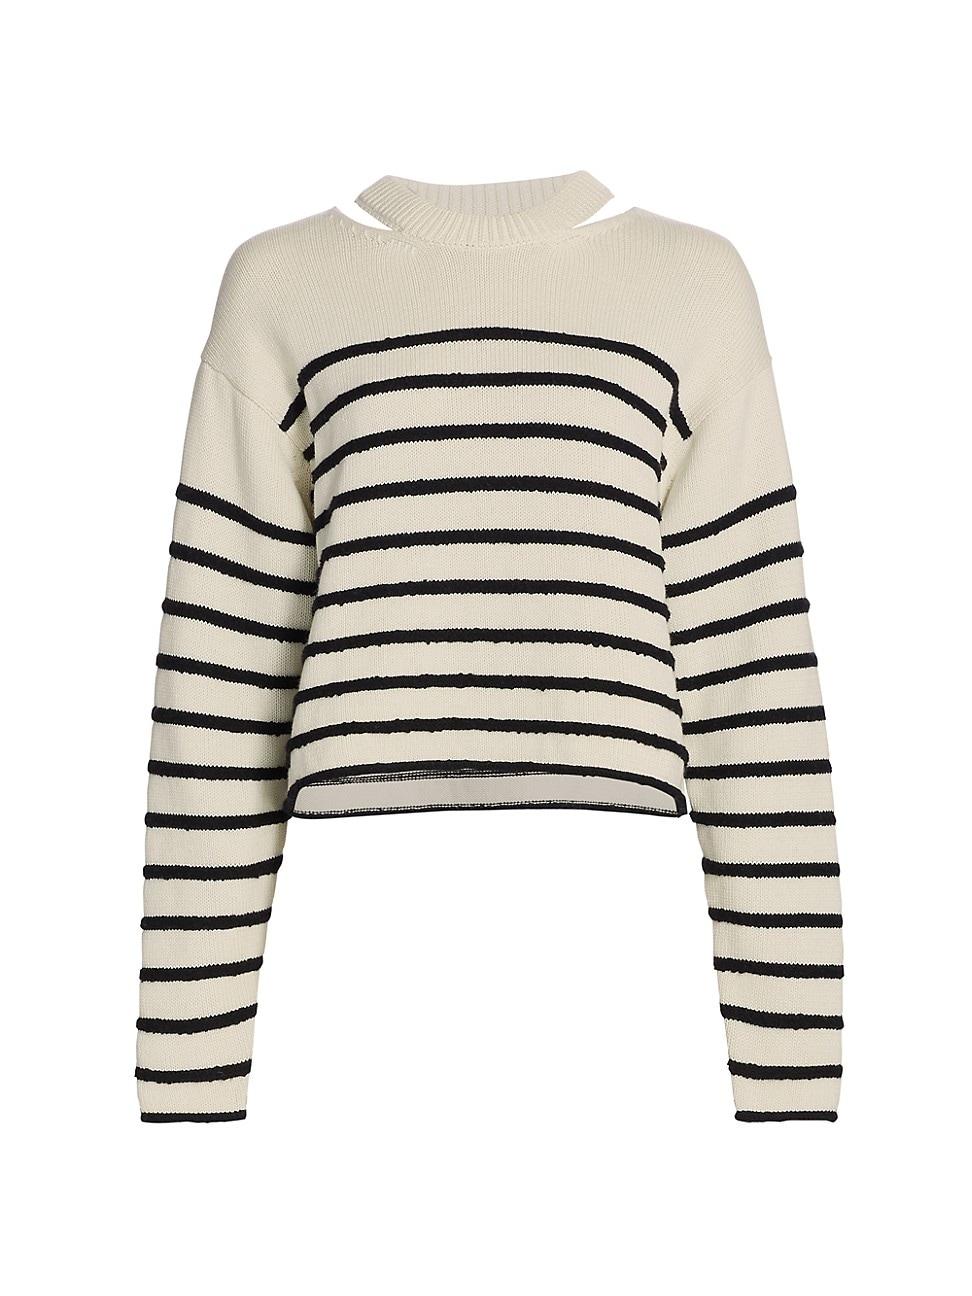 PROENZA SCHOULER WHITE LABEL Cotton Striped Bouclé Knit Sweater in ...